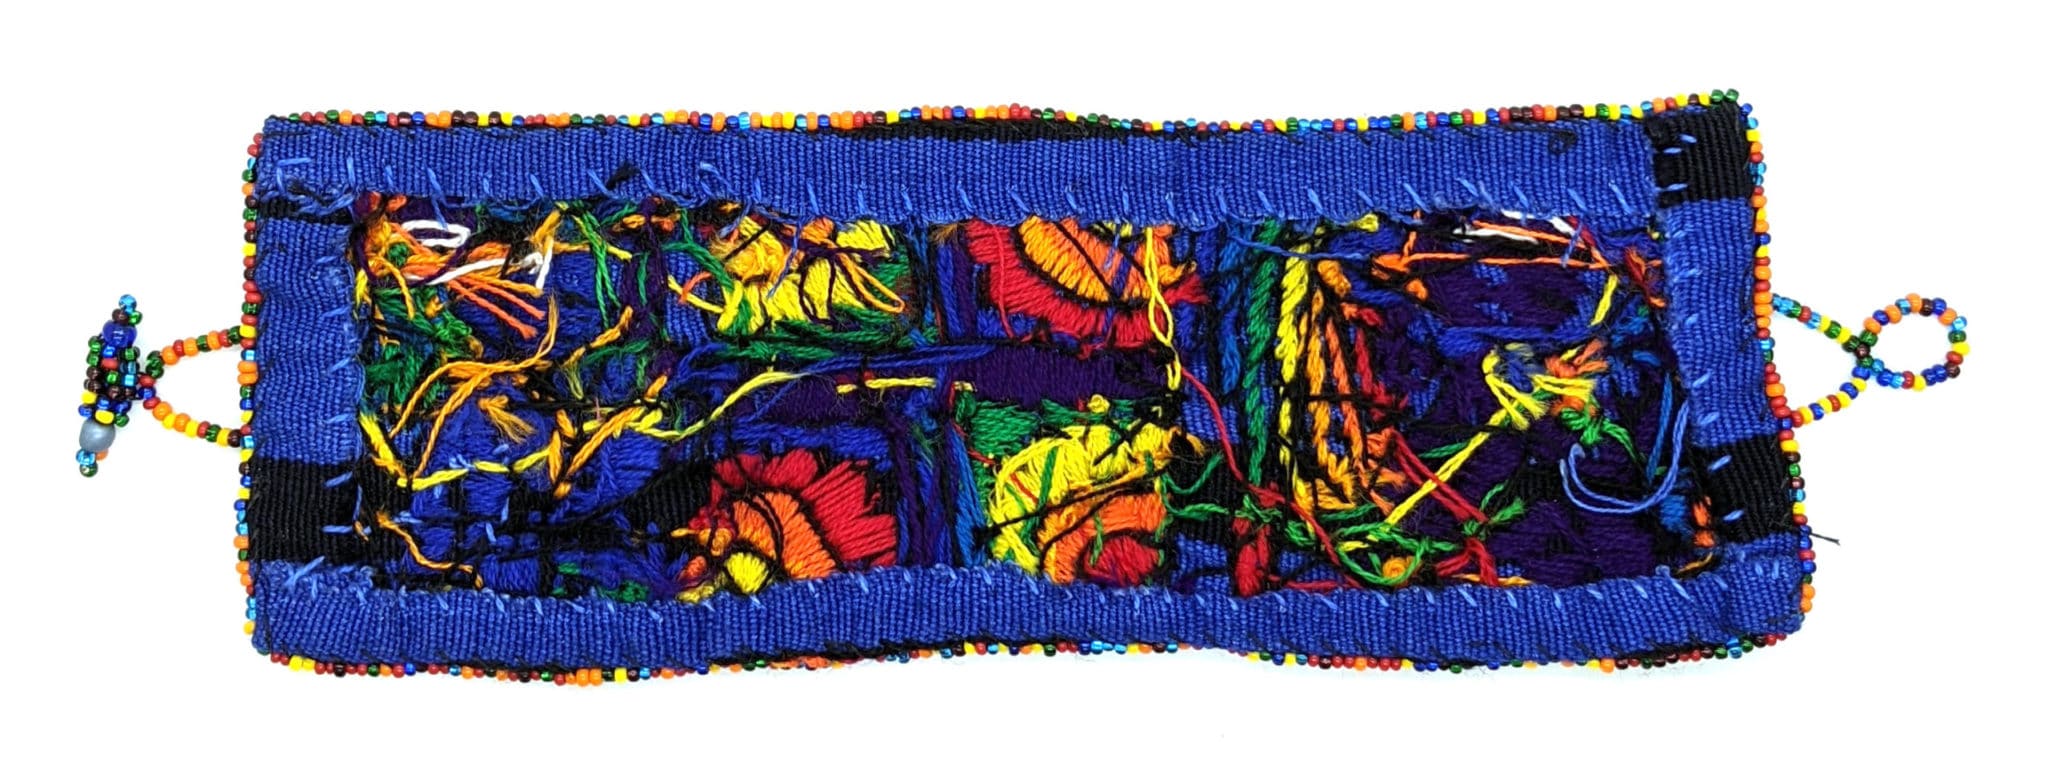 Rainbow Maya Gods and Symbols Hand-Embroidered Bracelet with Glass Beads Closure